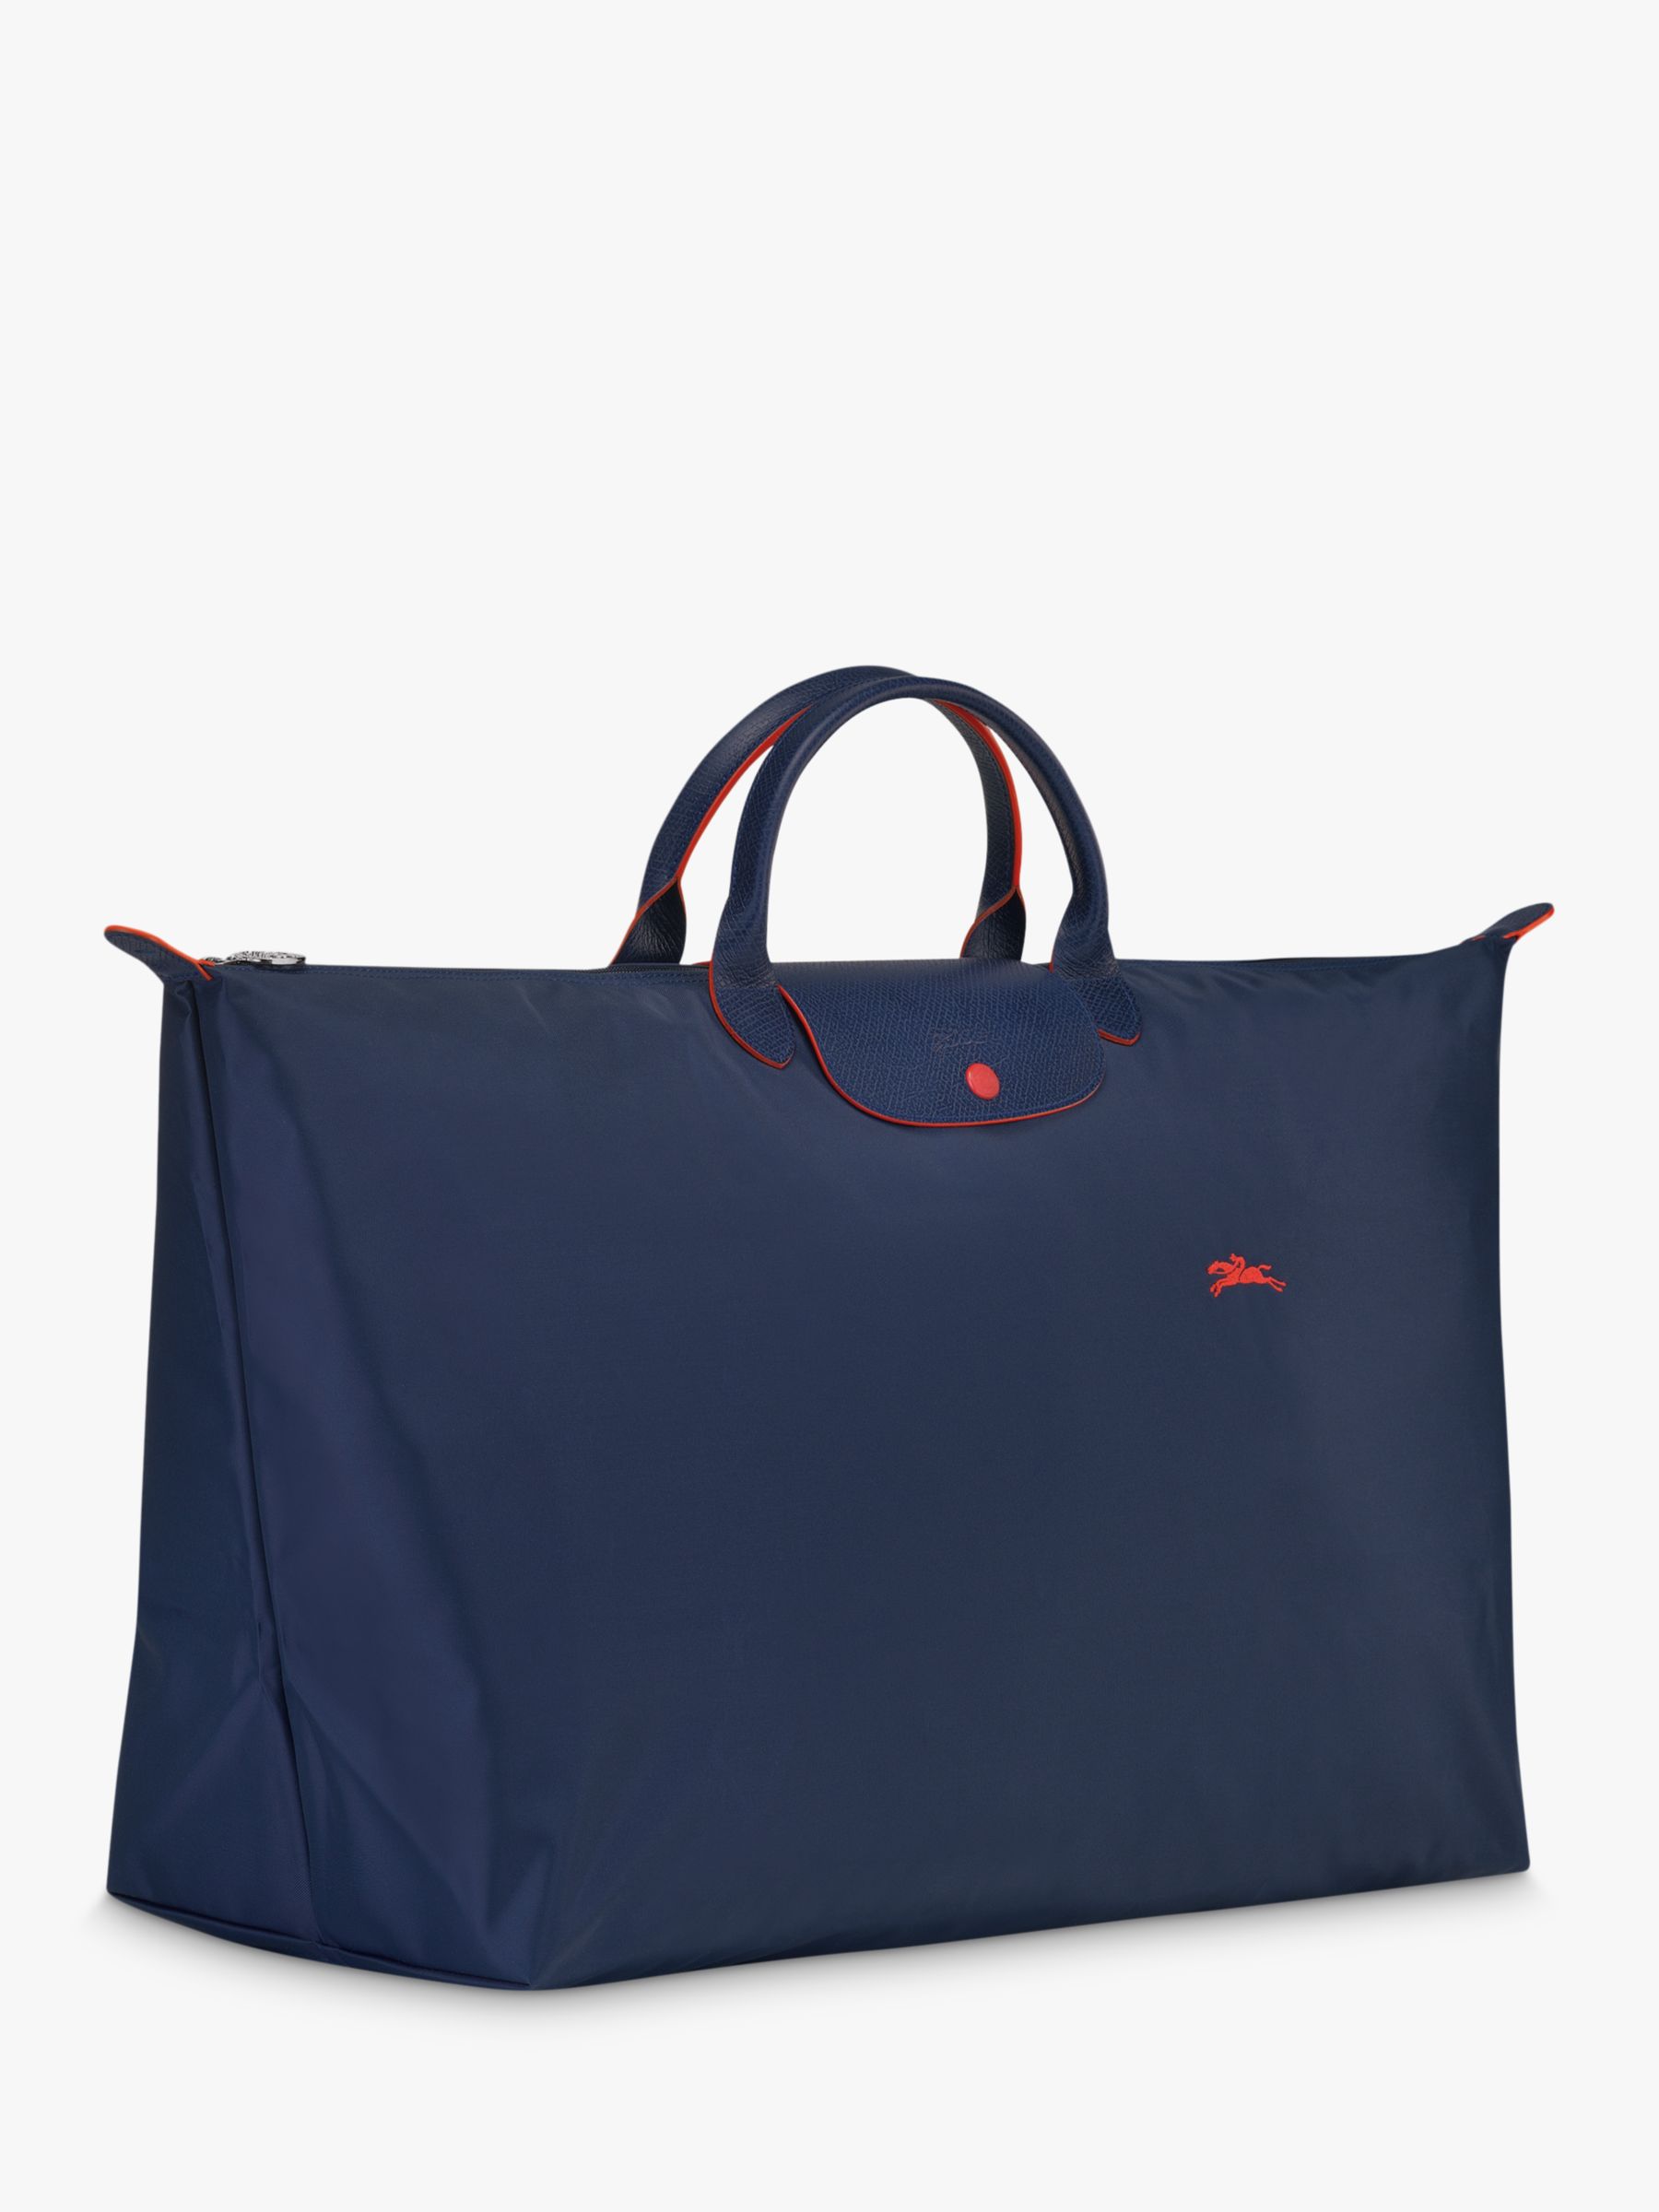 Longchamp Le Pliage Club XL Travel Bag, Navy at John Lewis & Partners